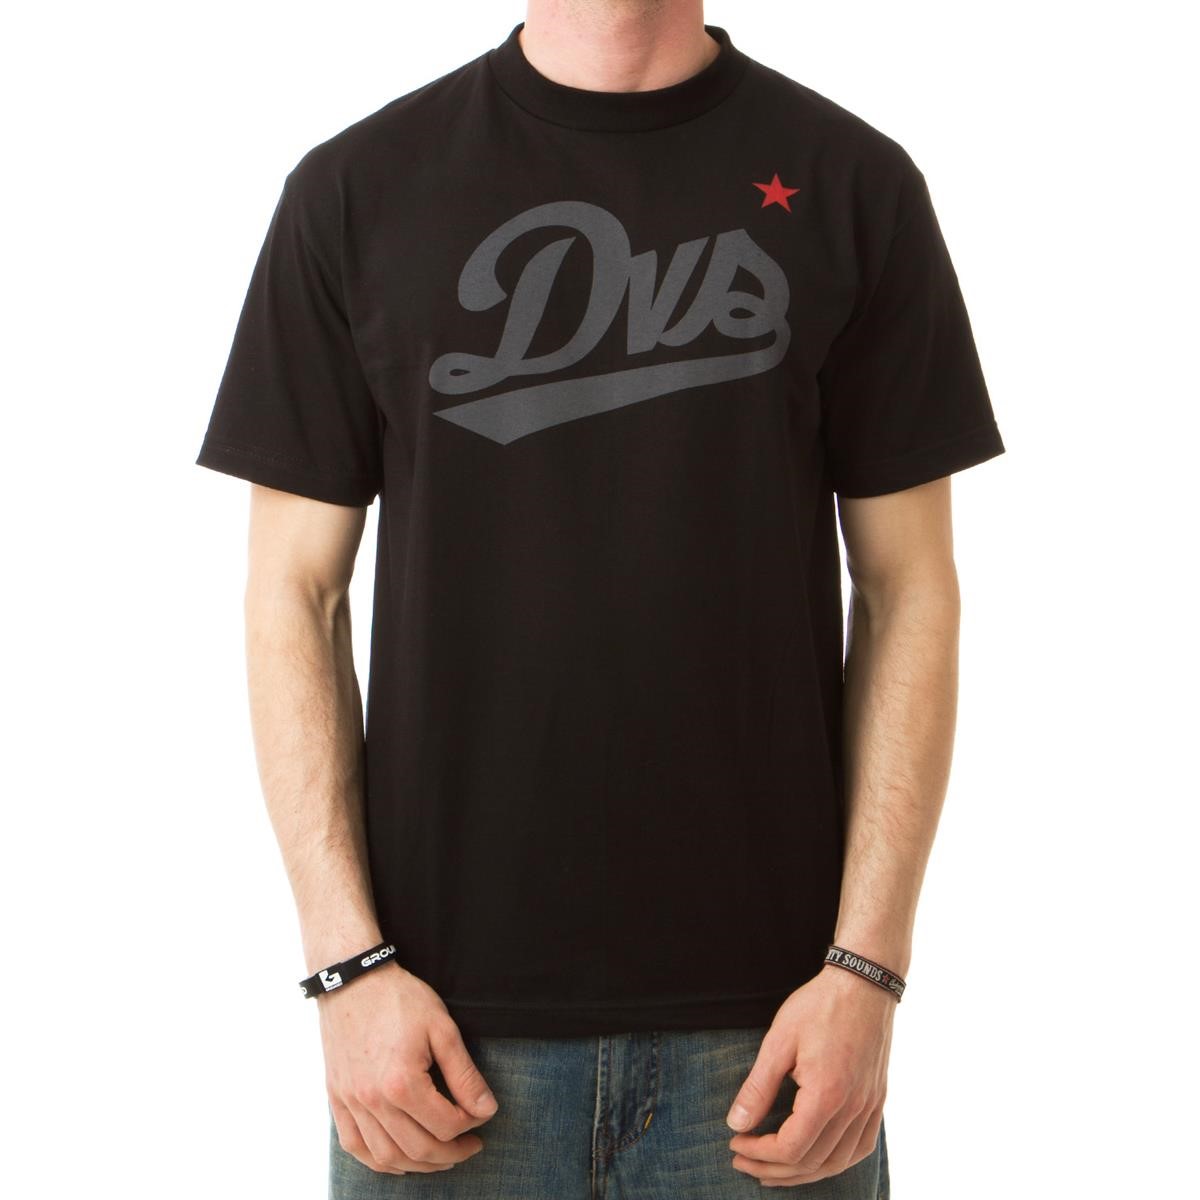 Freizeit/Streetwear Bekleidung-T-Shirts/Polos - DVS T-Shirt Sport 2 MB Black